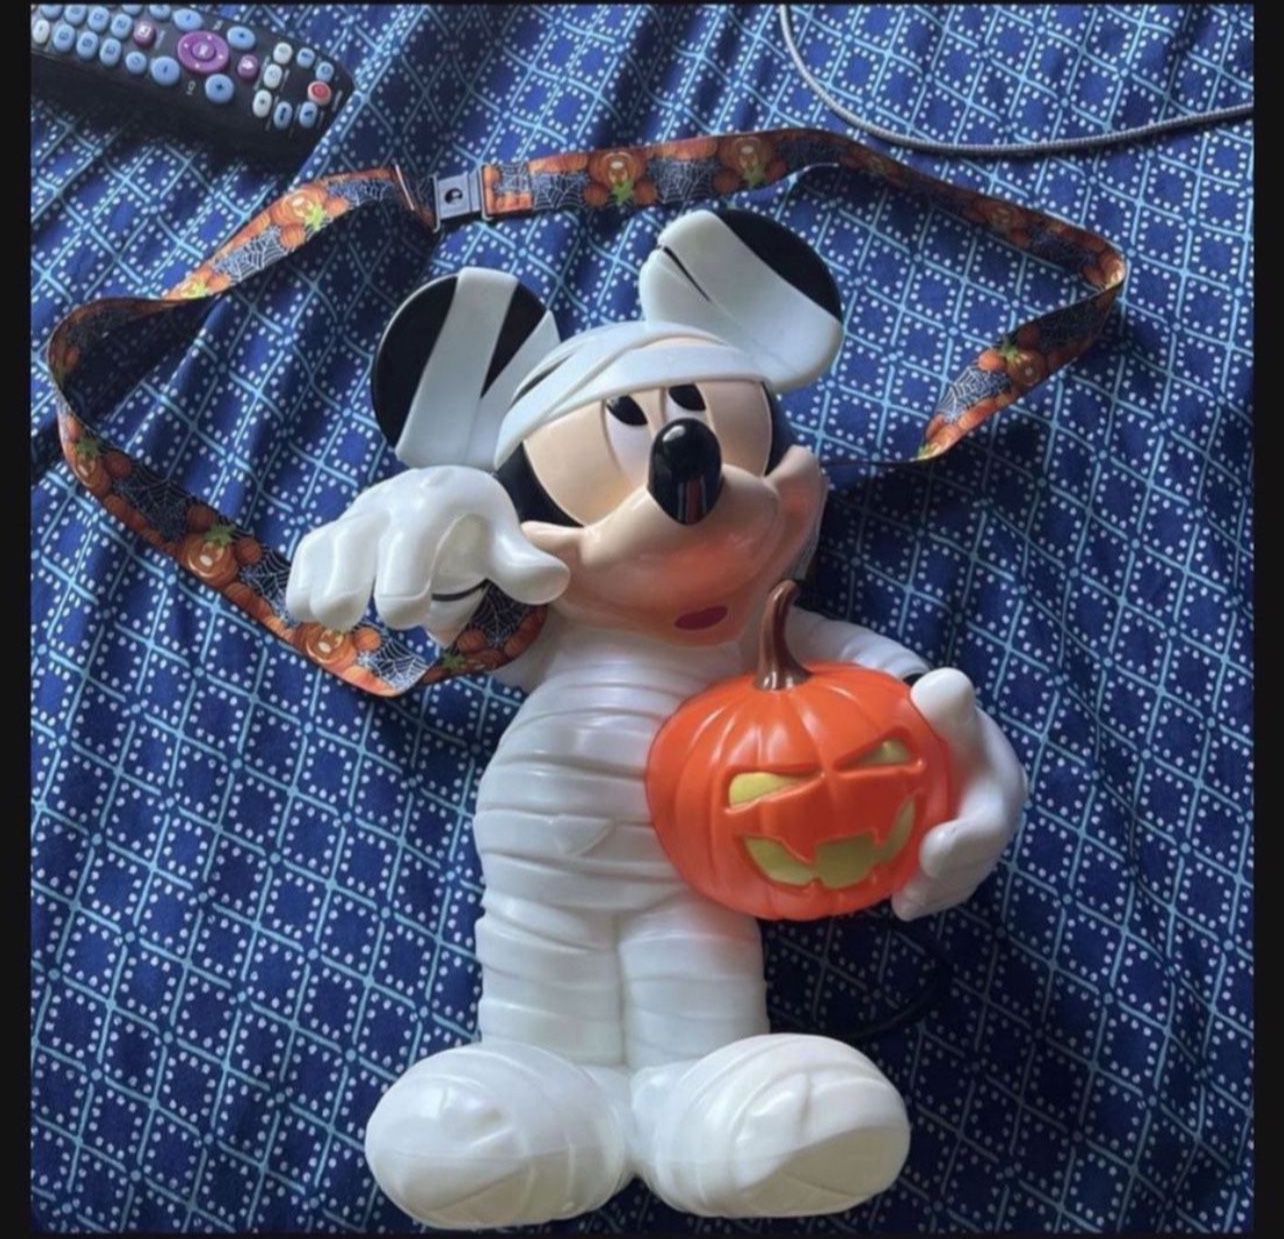 Disney Halloween Mickey Mouse popcorn bucket